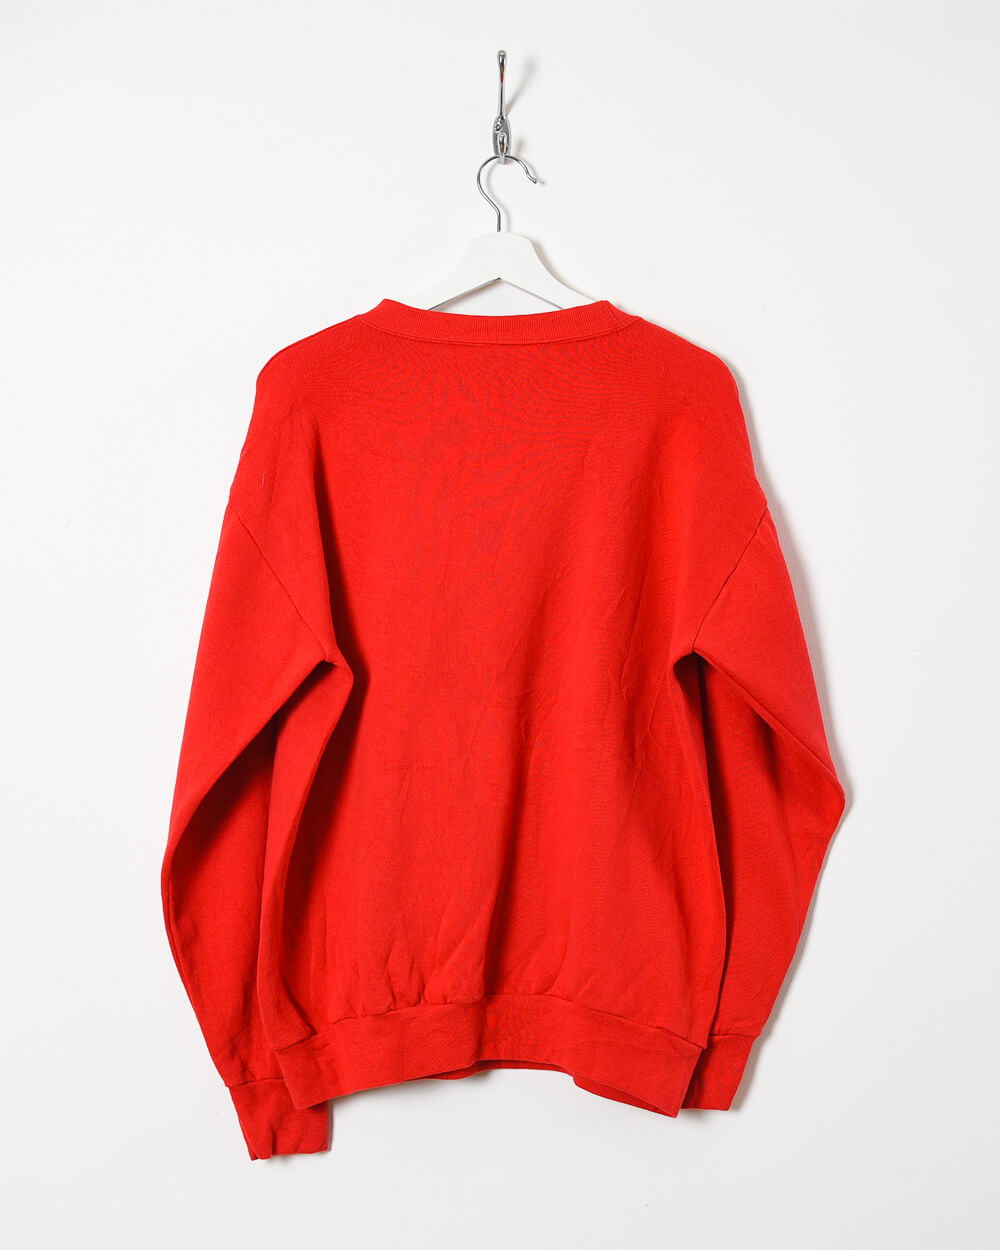 Nebraska Cornhuskers Sweatshirt - Medium - Domno Vintage 90s, 80s, 00s Retro and Vintage Clothing 